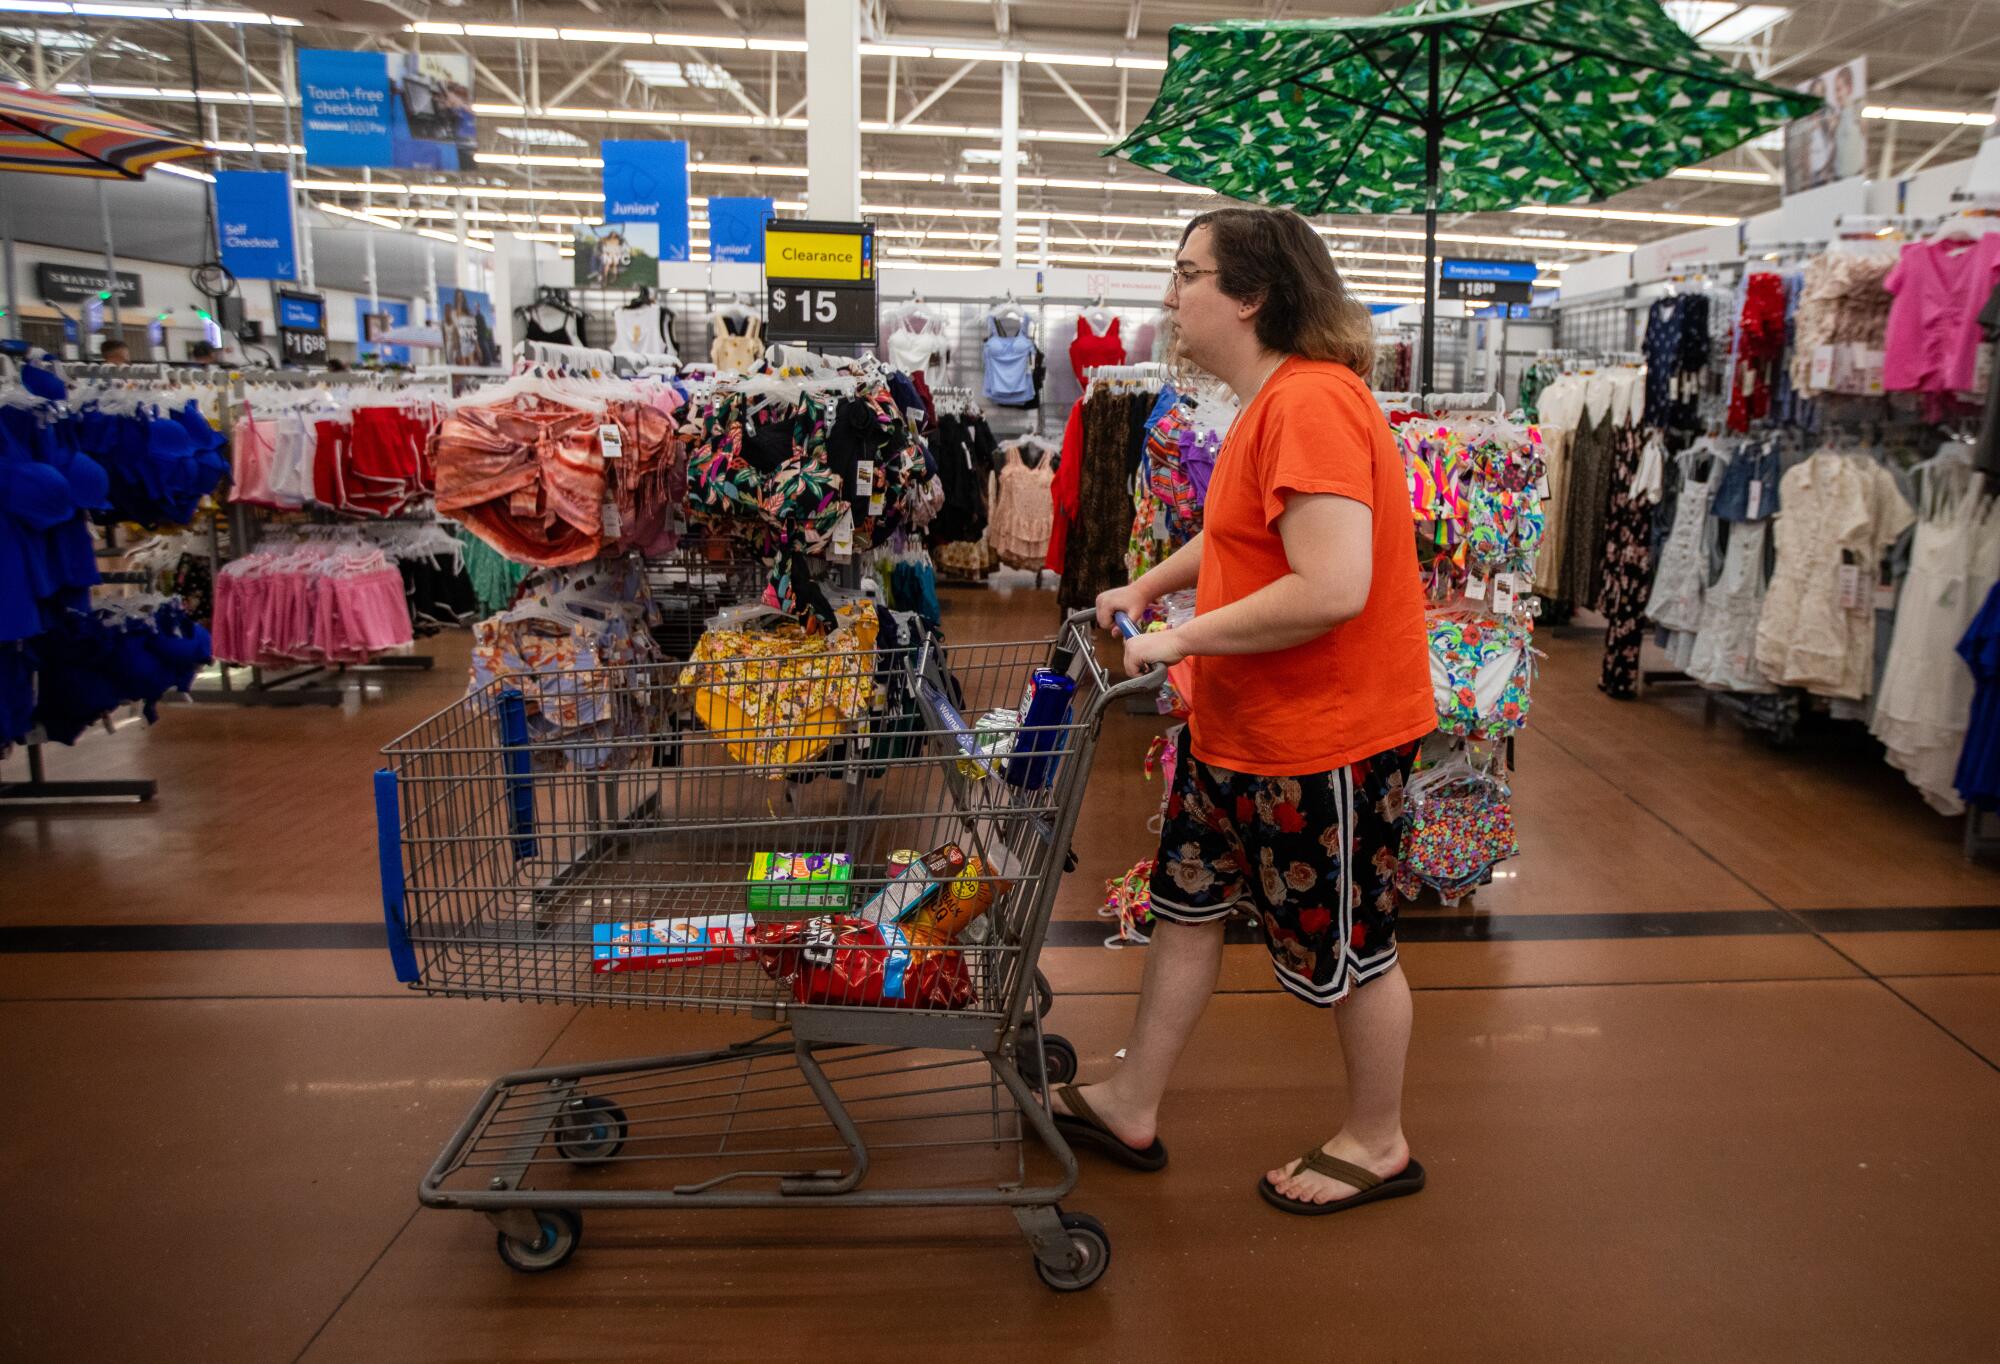 A woman pushes a shopping cart through a store.